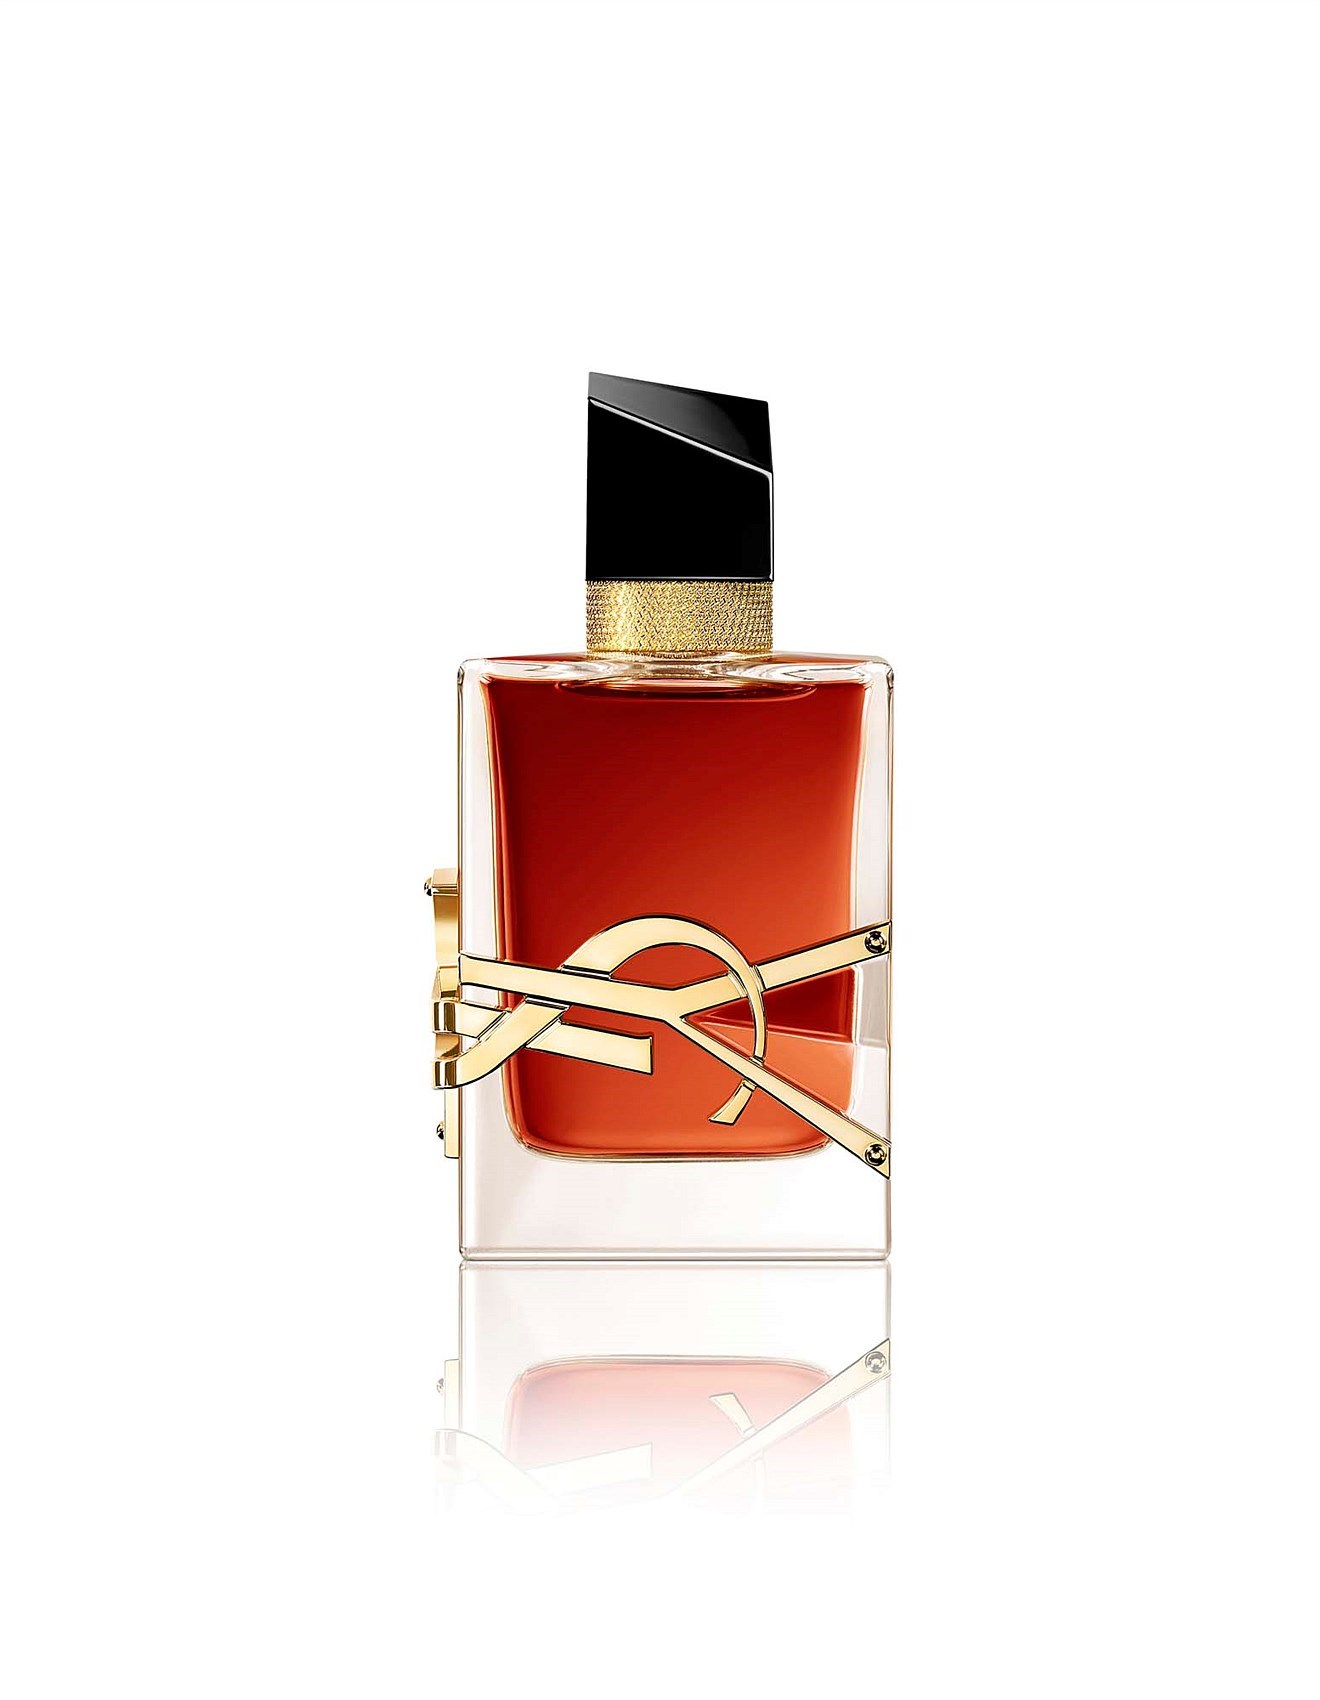 YSL Libre Le Parfum EDP, 50ml, $215 at YSL Beauty